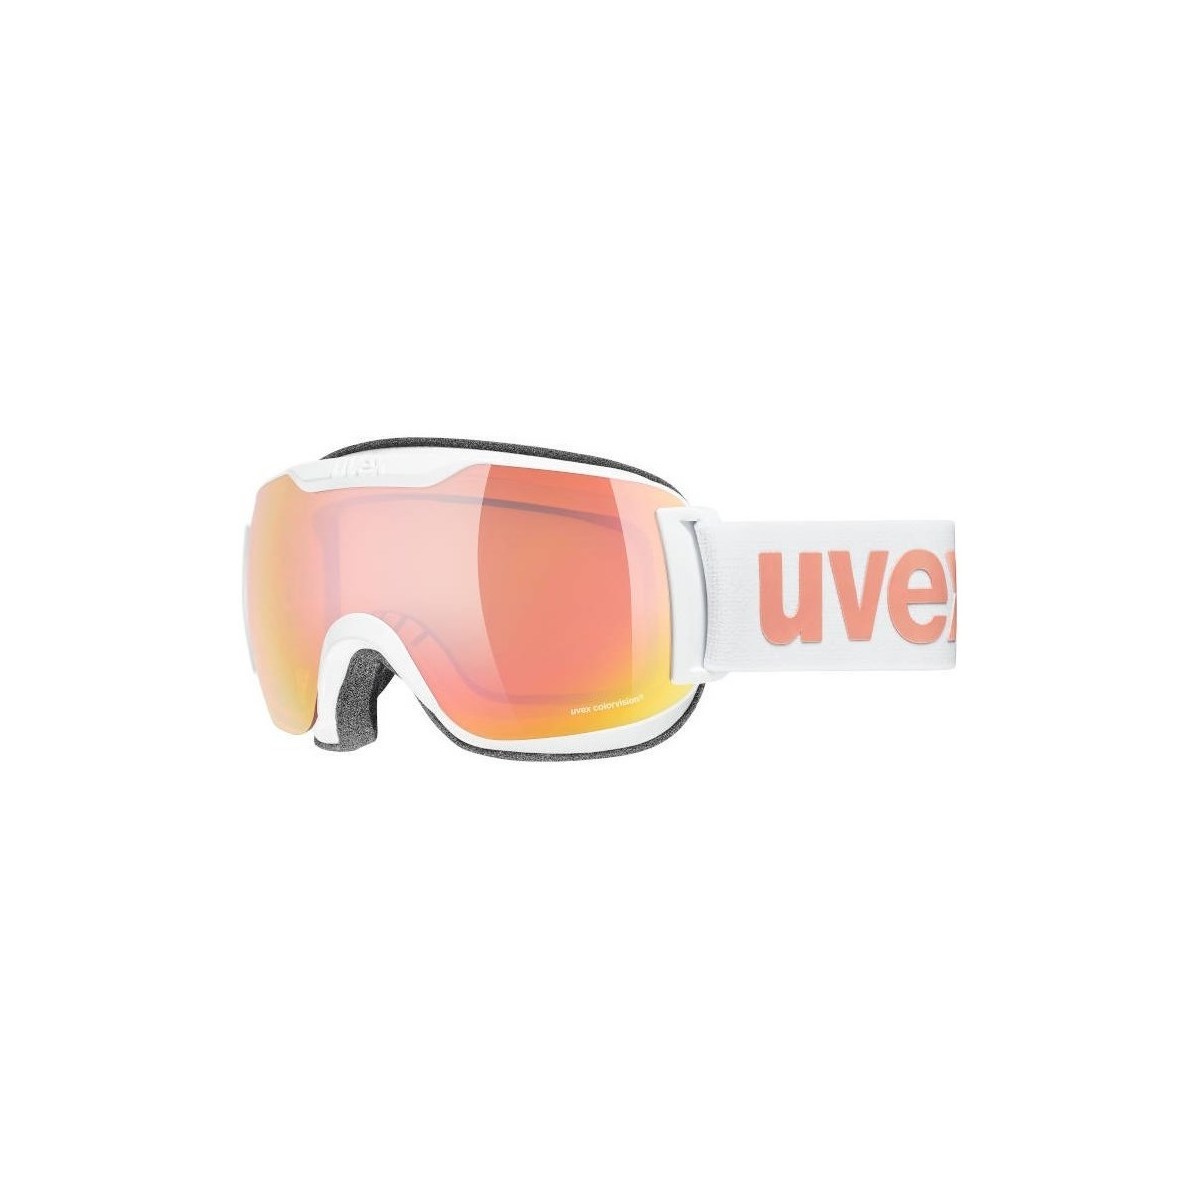 Accessories Sportstilbehør Uvex Downhill 2000 S CV 1030 2021 Pink, Hvid